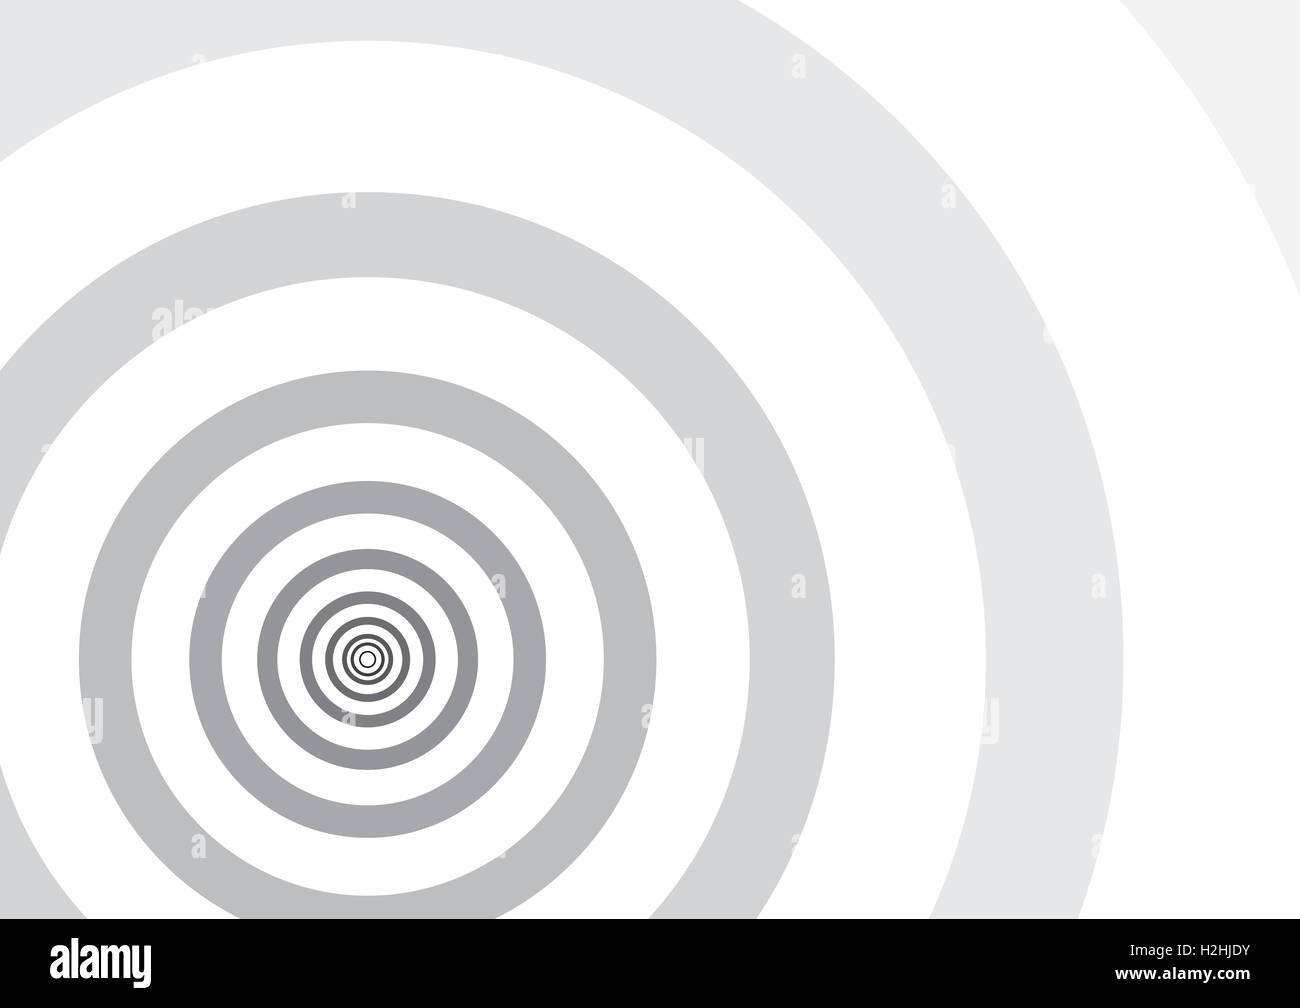 [JPEG] Background - Fibonacci circles - black and white monochrome grayscale - illustration Stock Photo